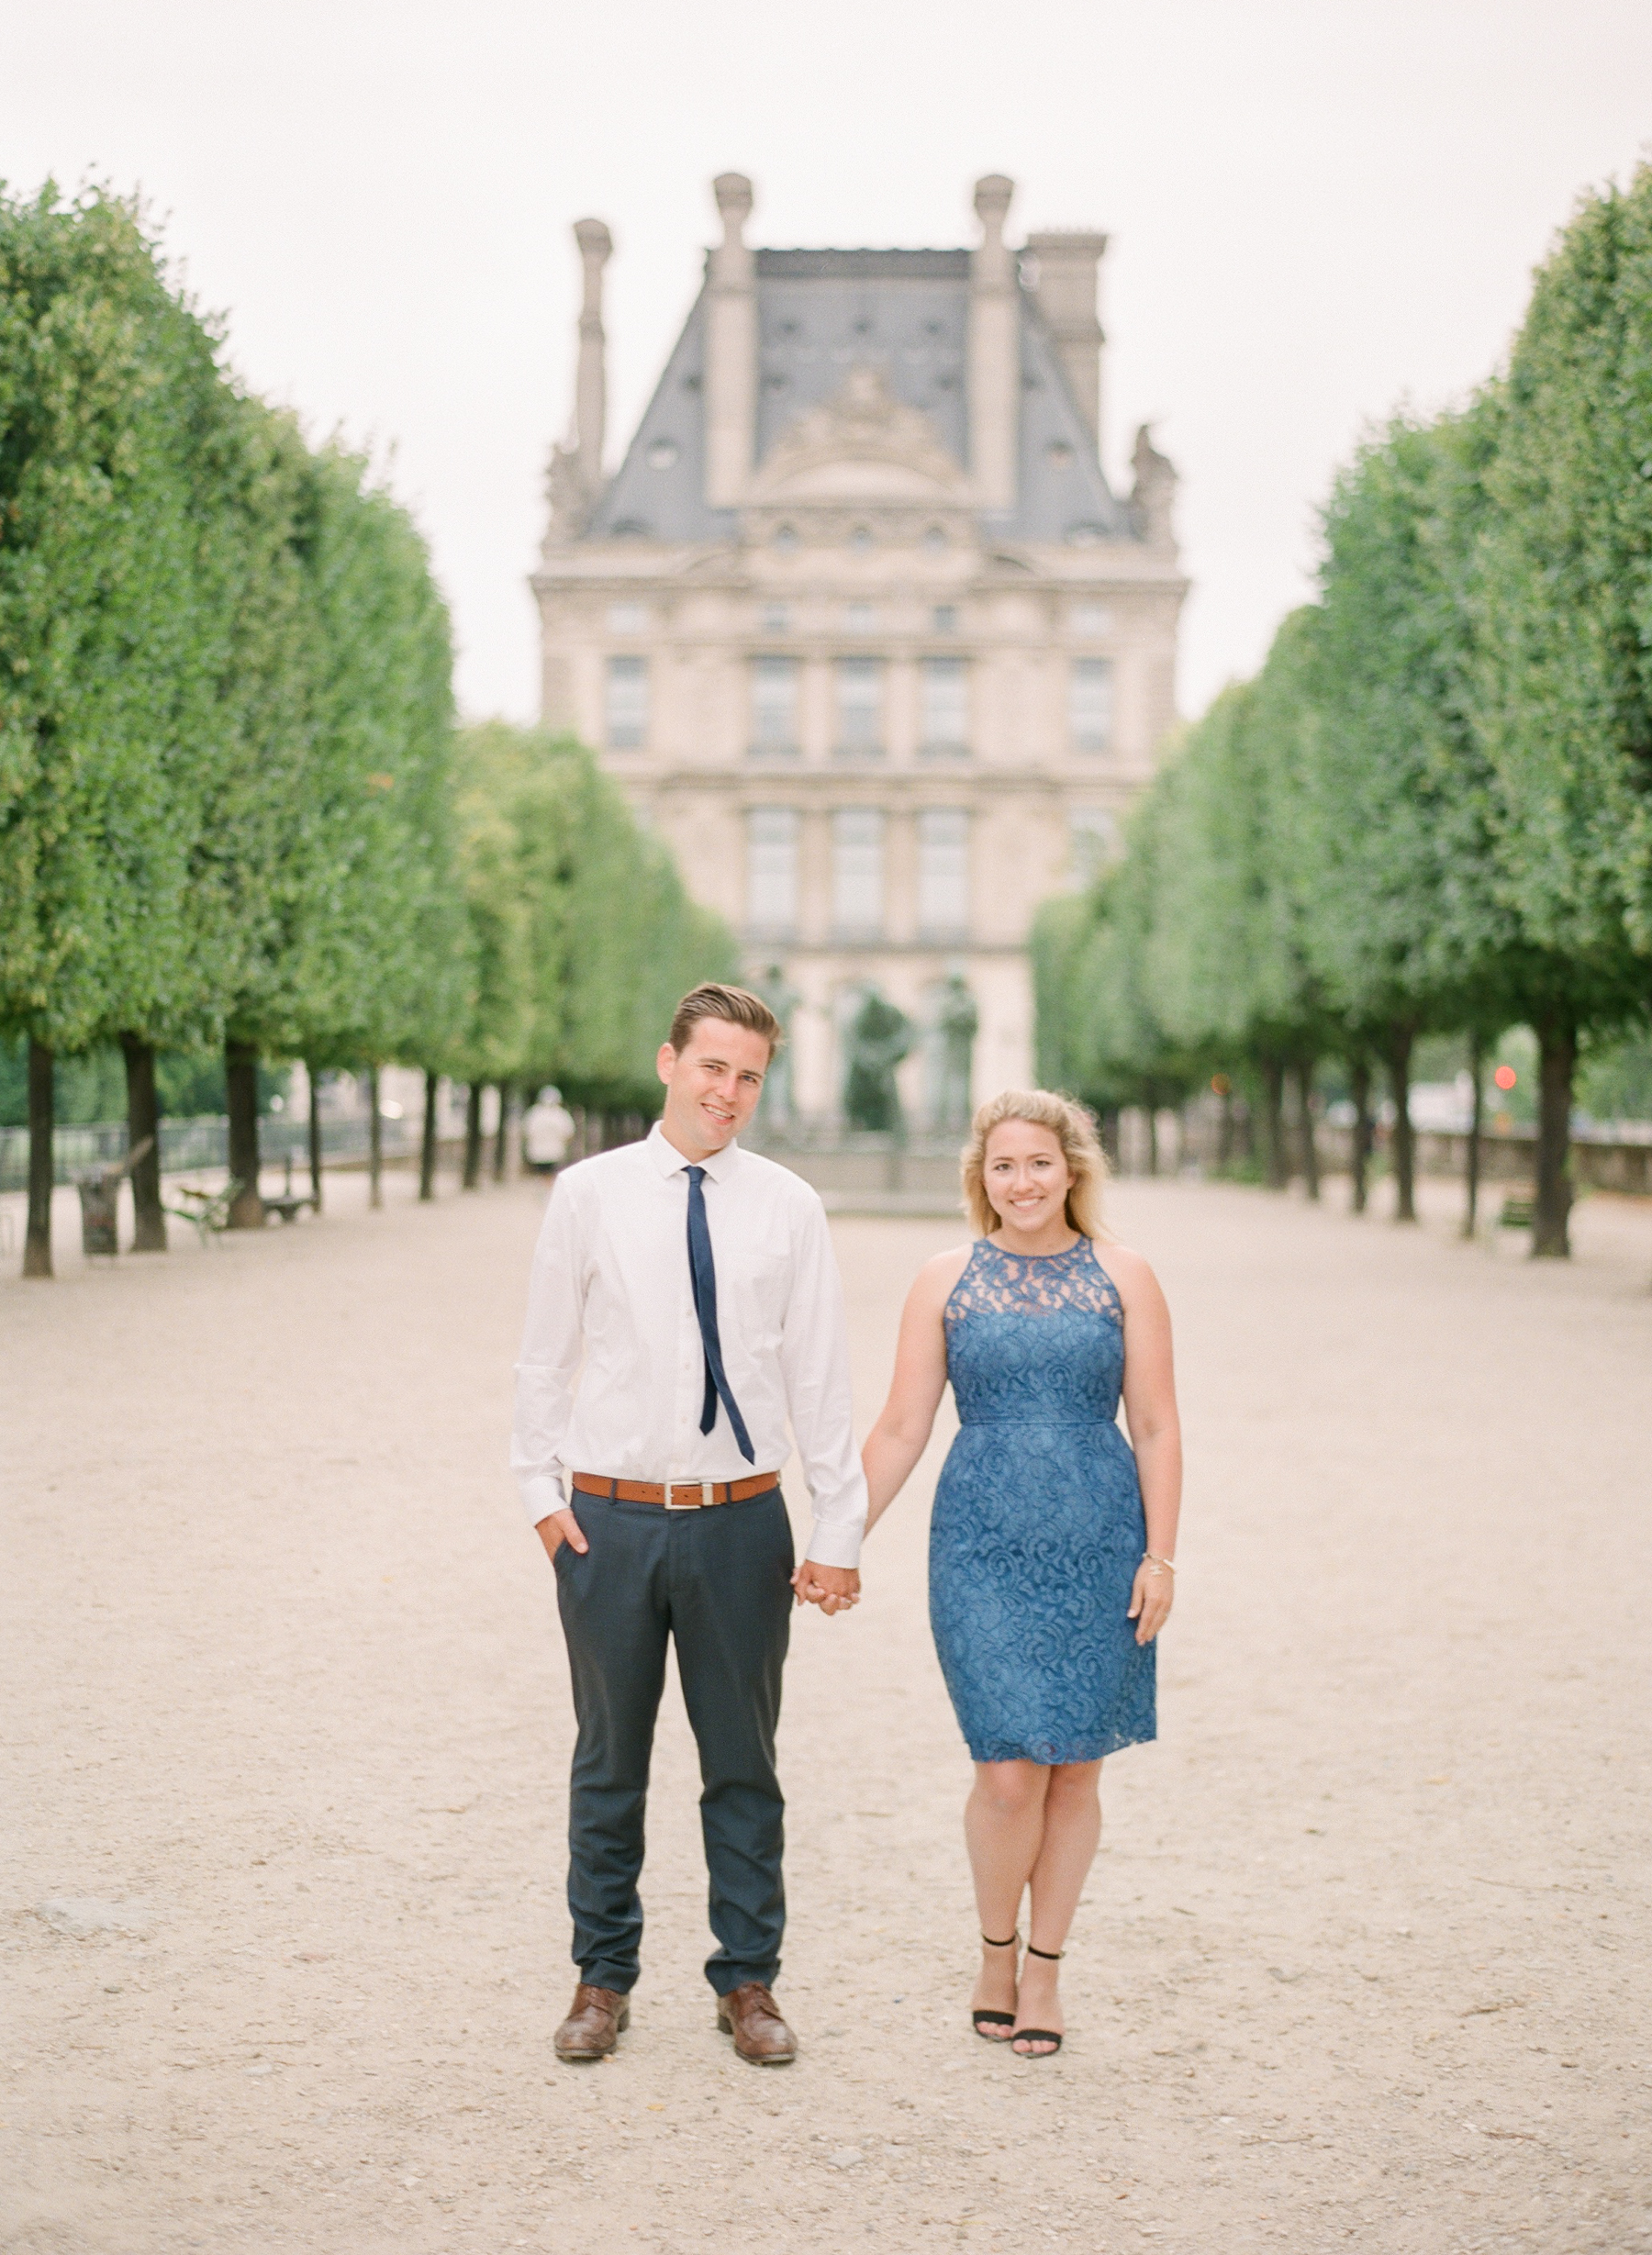 Paris Honeymoon Photographer | France Wedding Photographer | Paris Film Photography | Molly Carr Photography | Jardin Des Tuileries Engagement Session | Girl In Blue Lace JCrew Dress